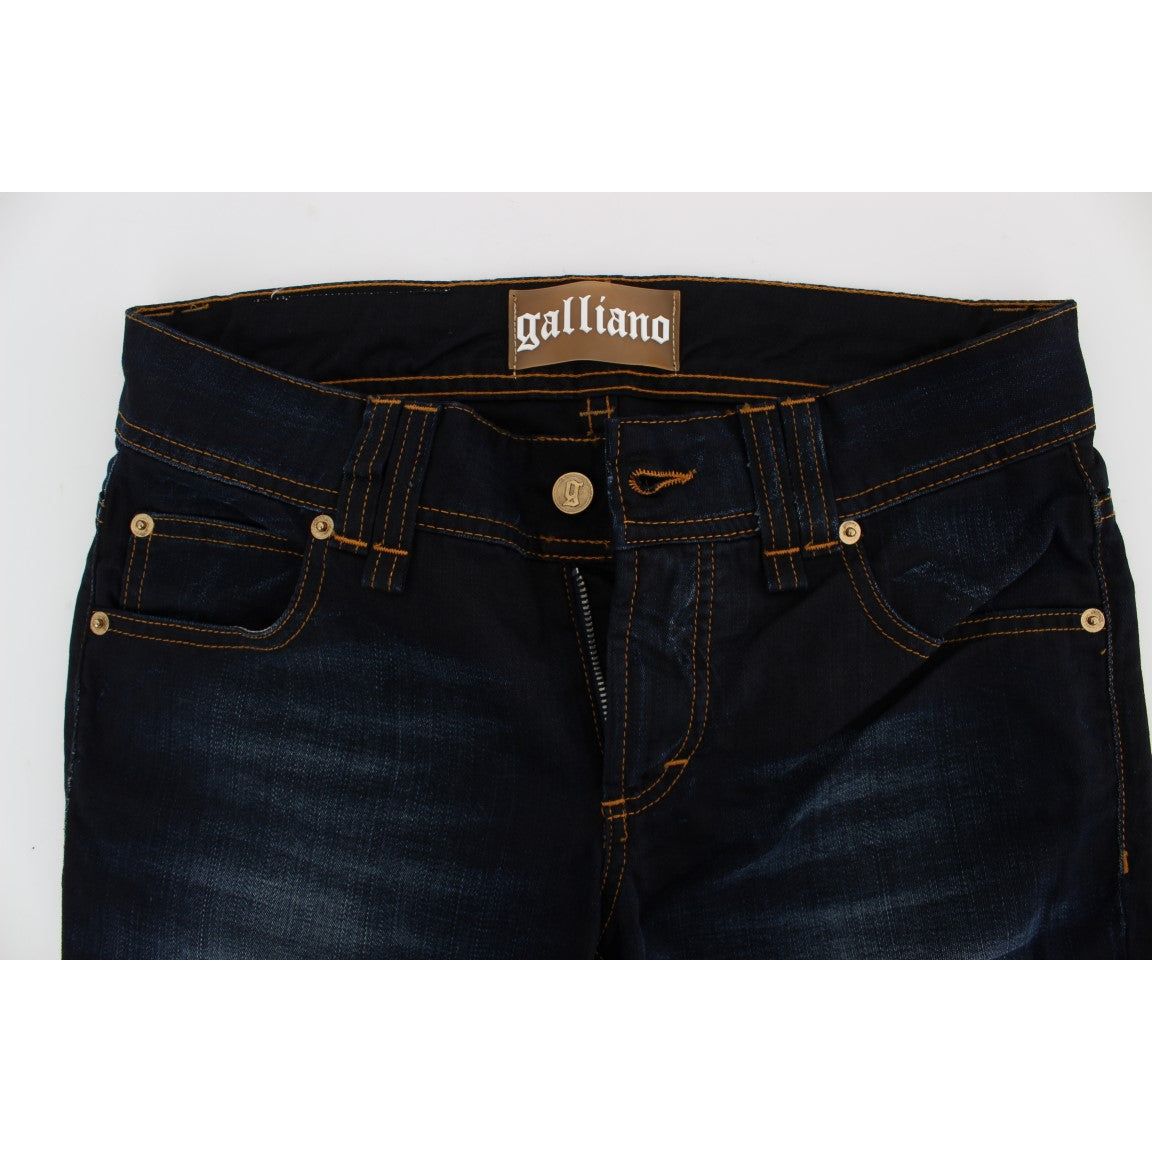 John Galliano Elegant Slim Fit Designer Jeans blue-wash-cotton-slim-fit-jeans-1 329959-blue-wash-cotton-slim-fit-jeans-2-4.jpg